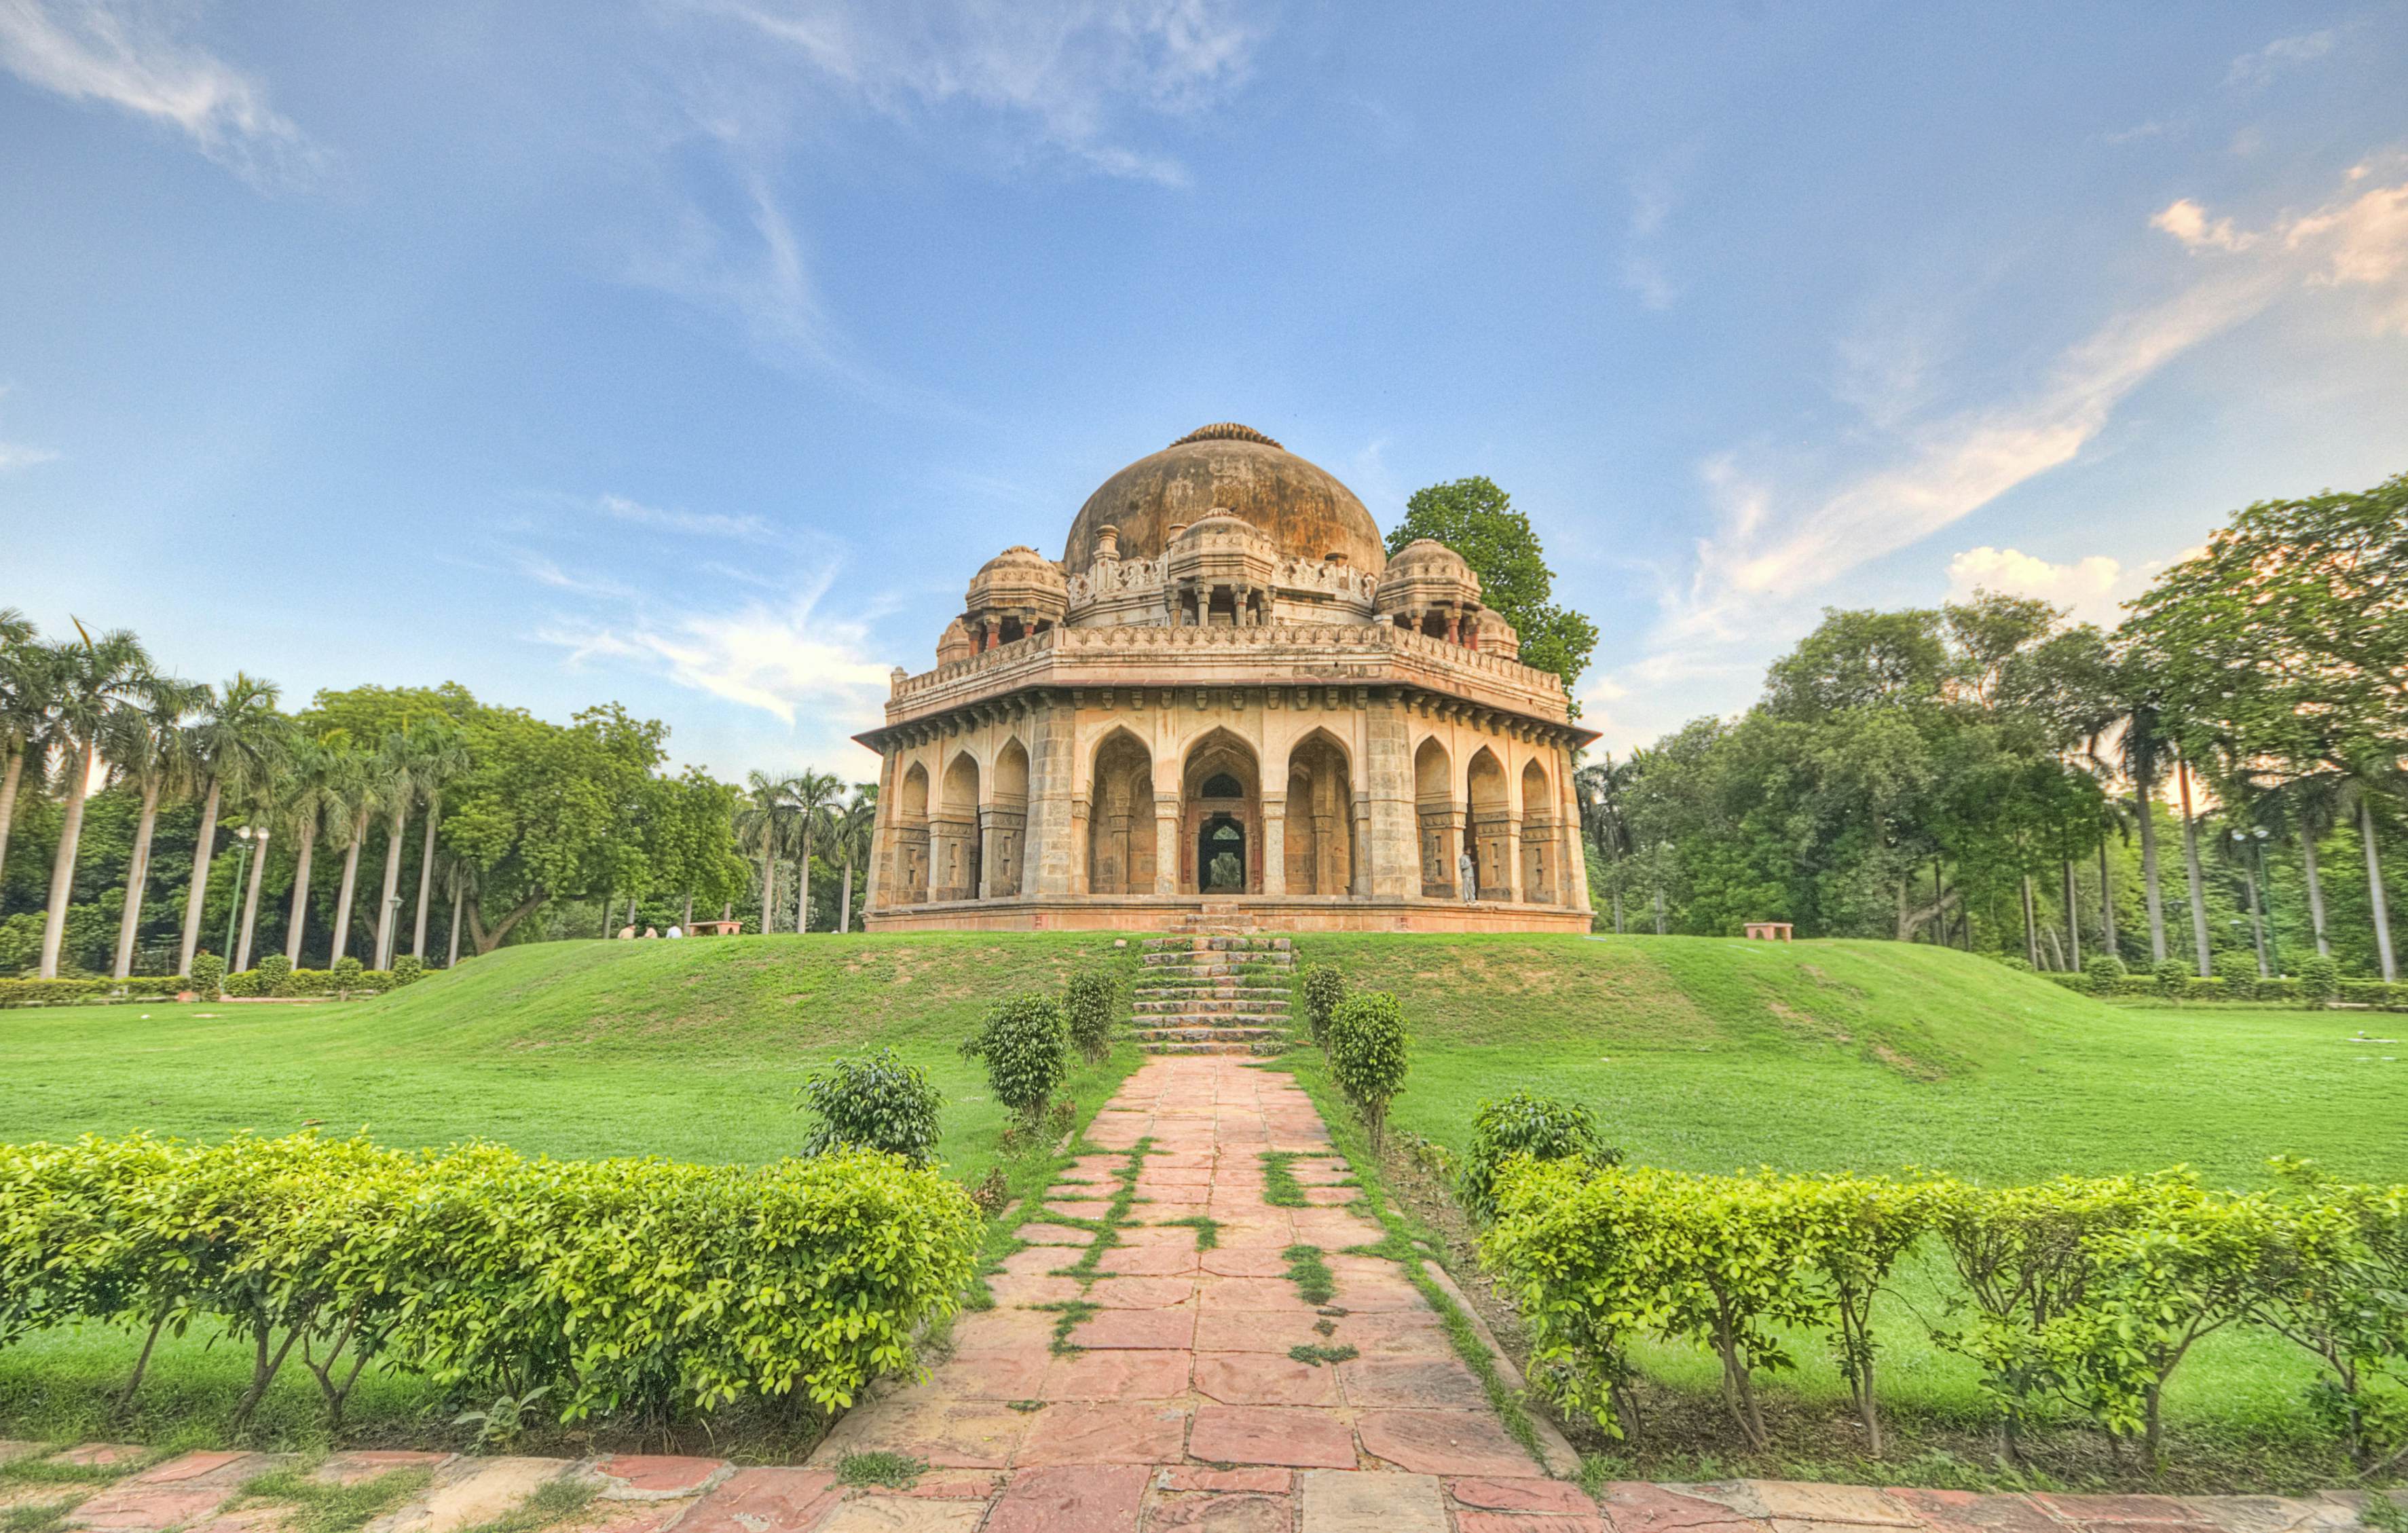 Lodi Garden | Delhi, India Attractions - Lonely Planet